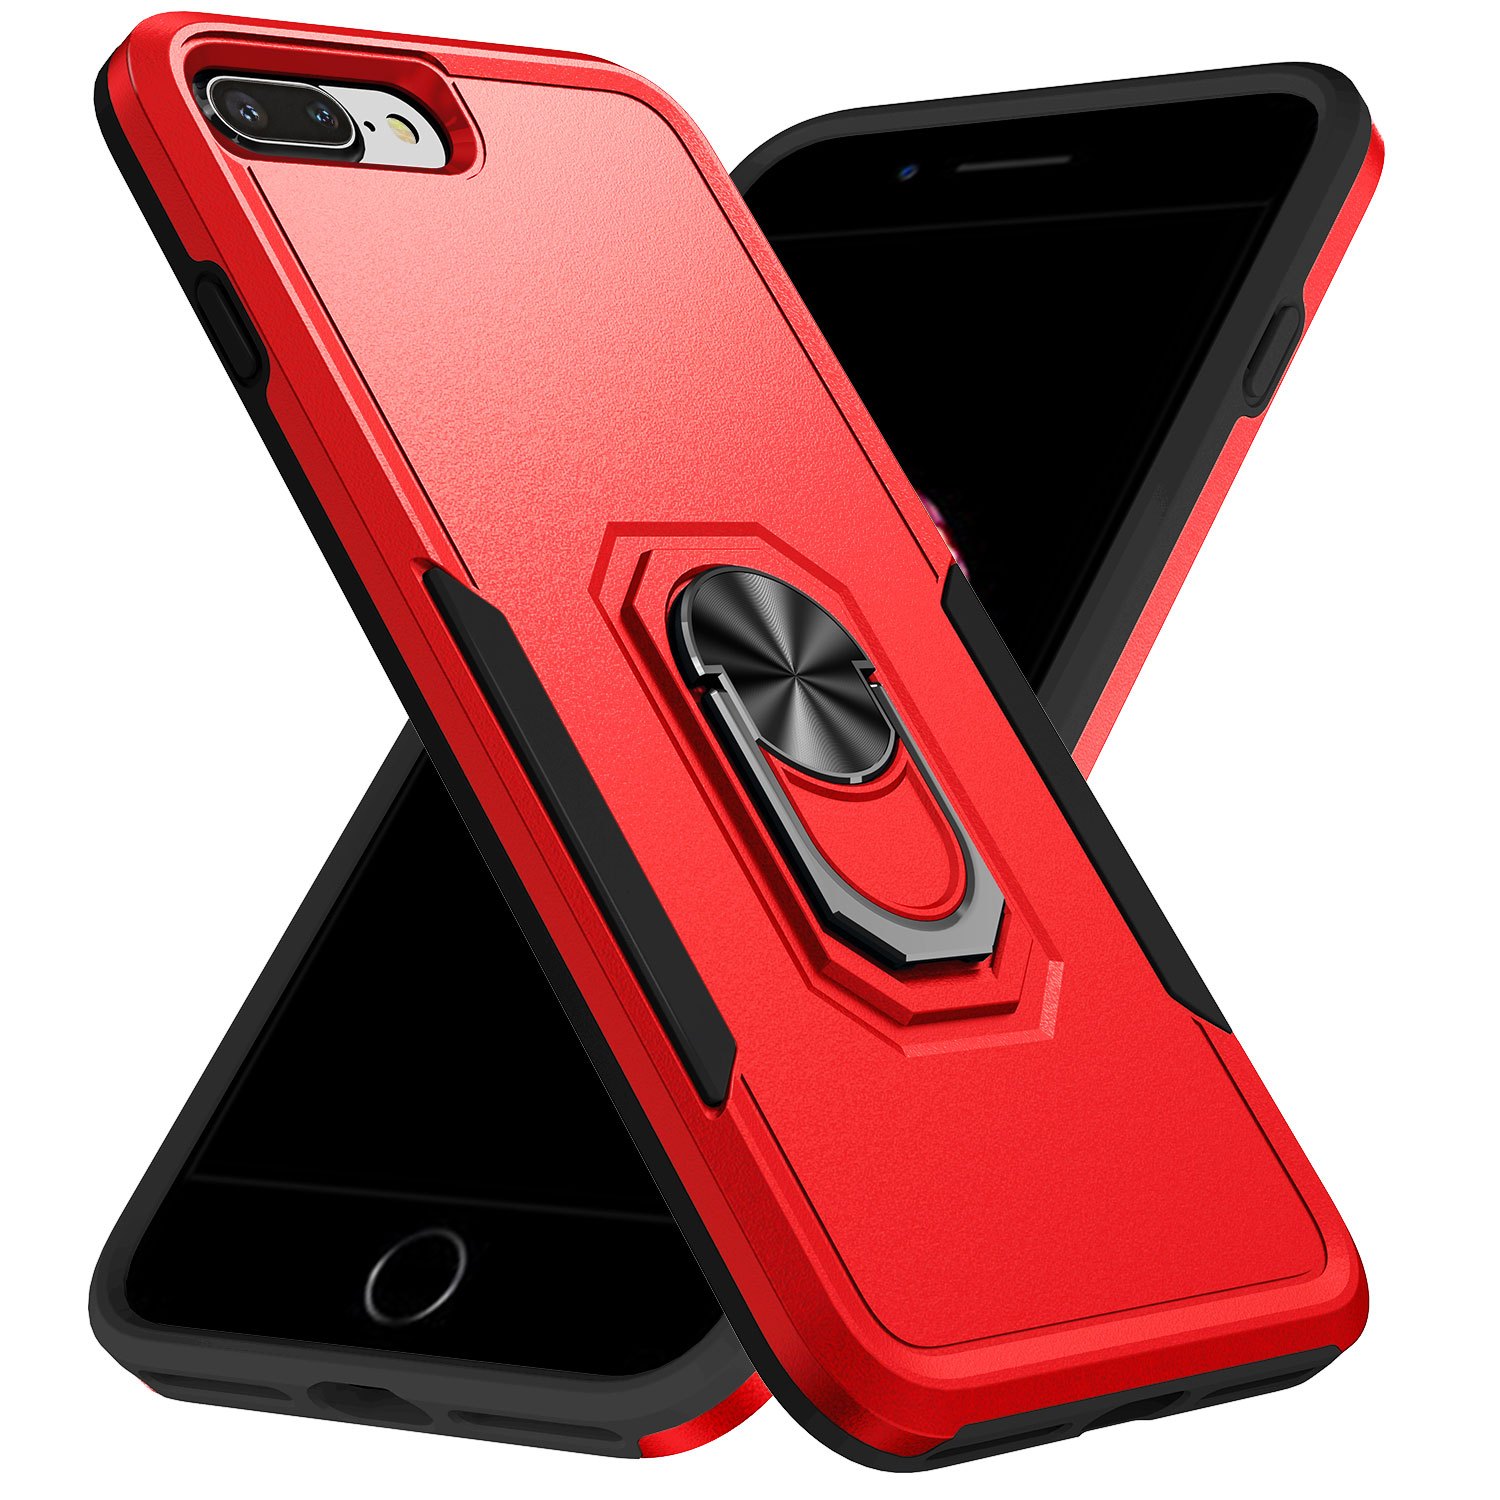 iPhone 7/8 Plus - Protector fuerte a prueba de golpes de 3 capas